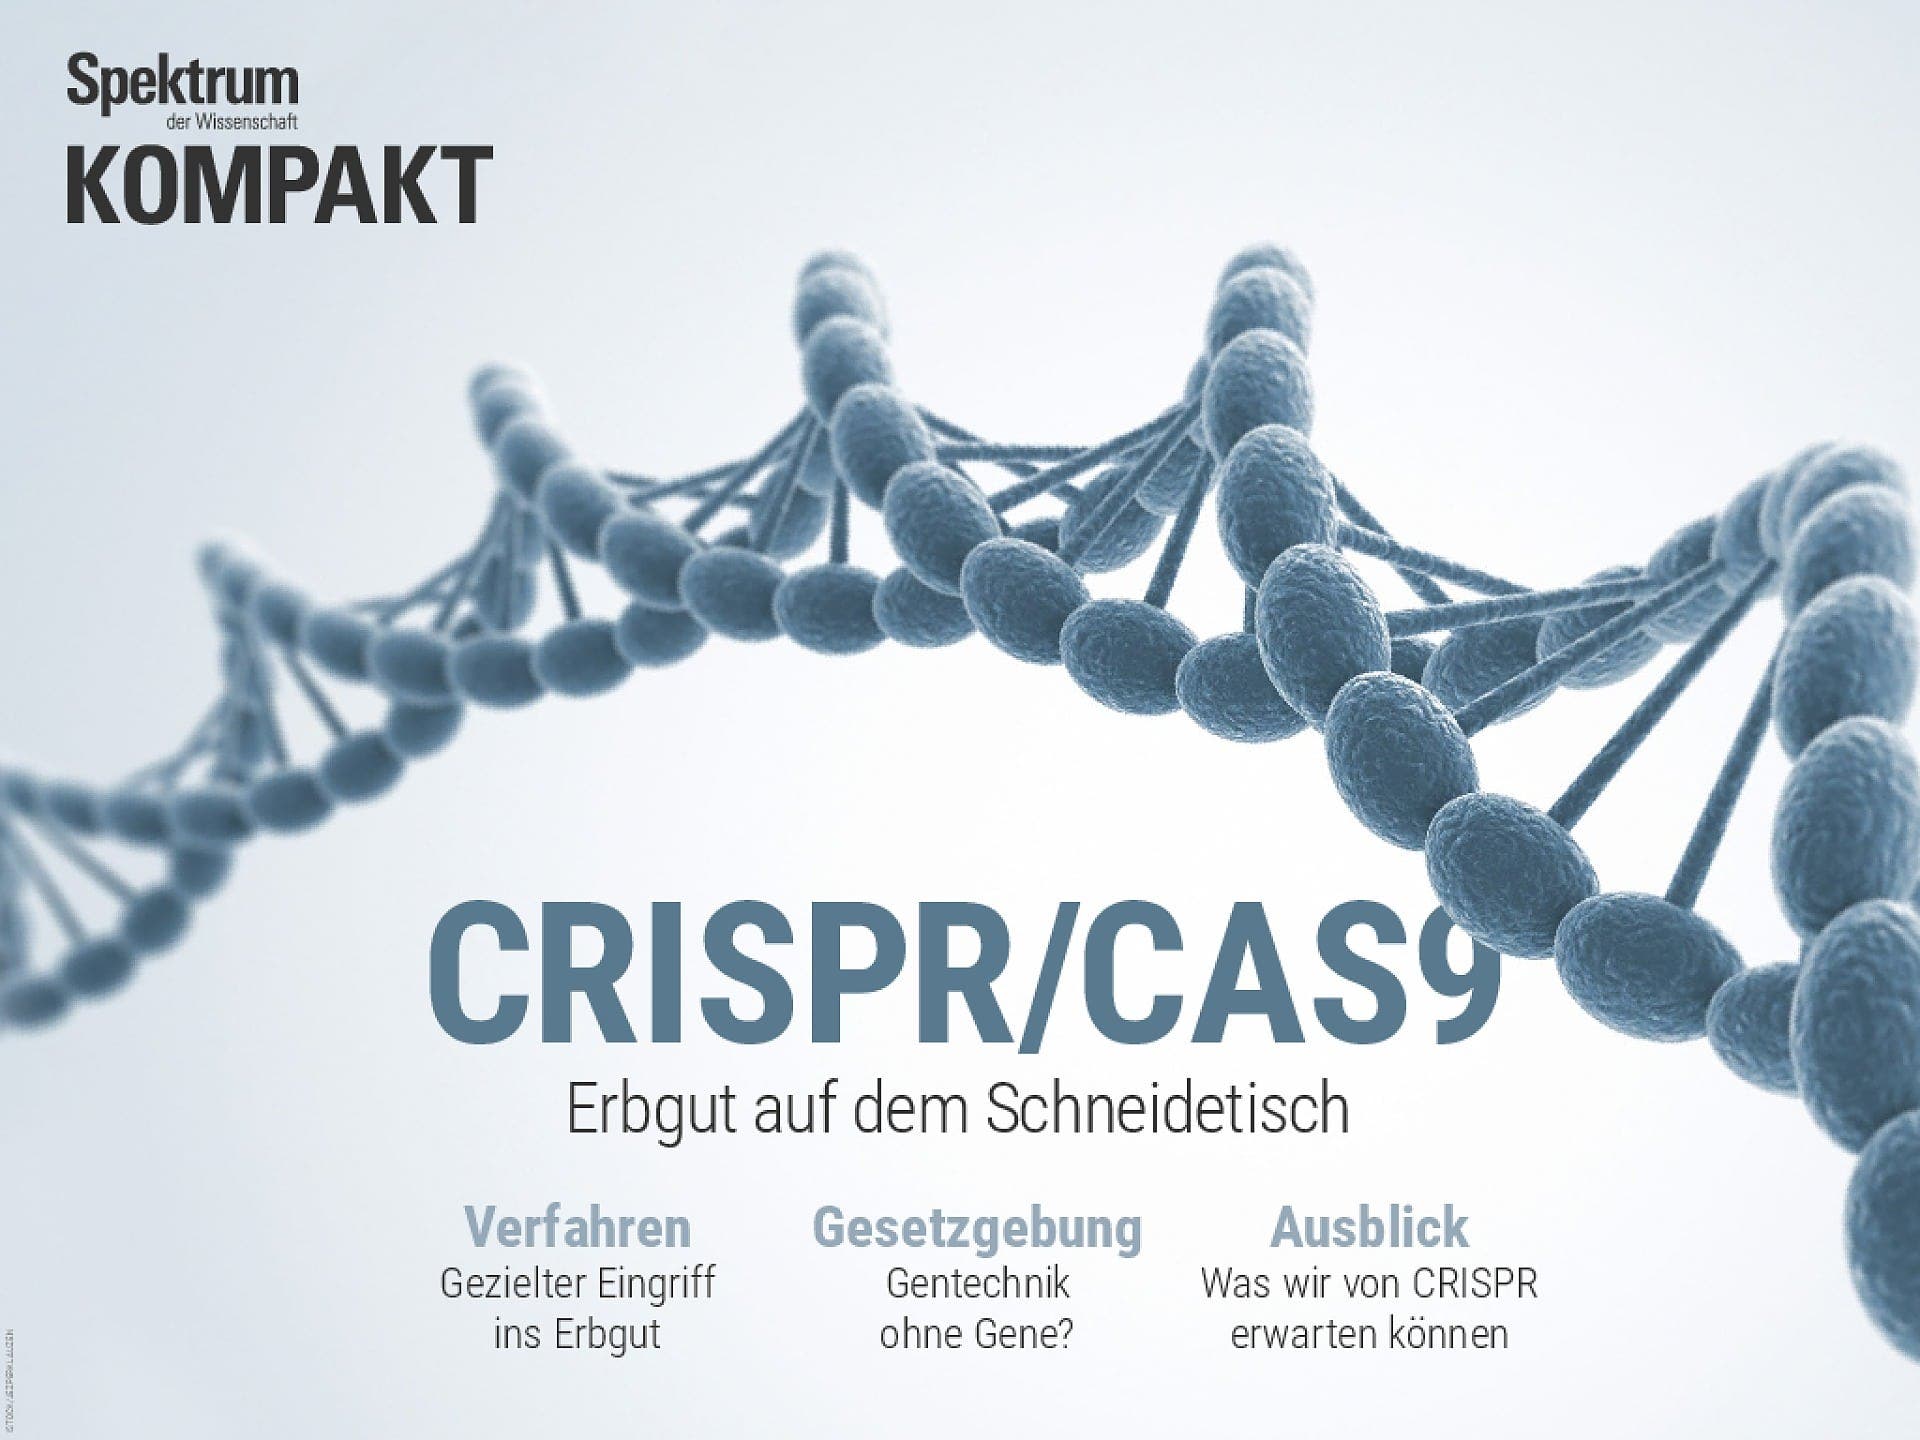 CRISPR/Cas9 - Erbgut auf dem Schneidetisch